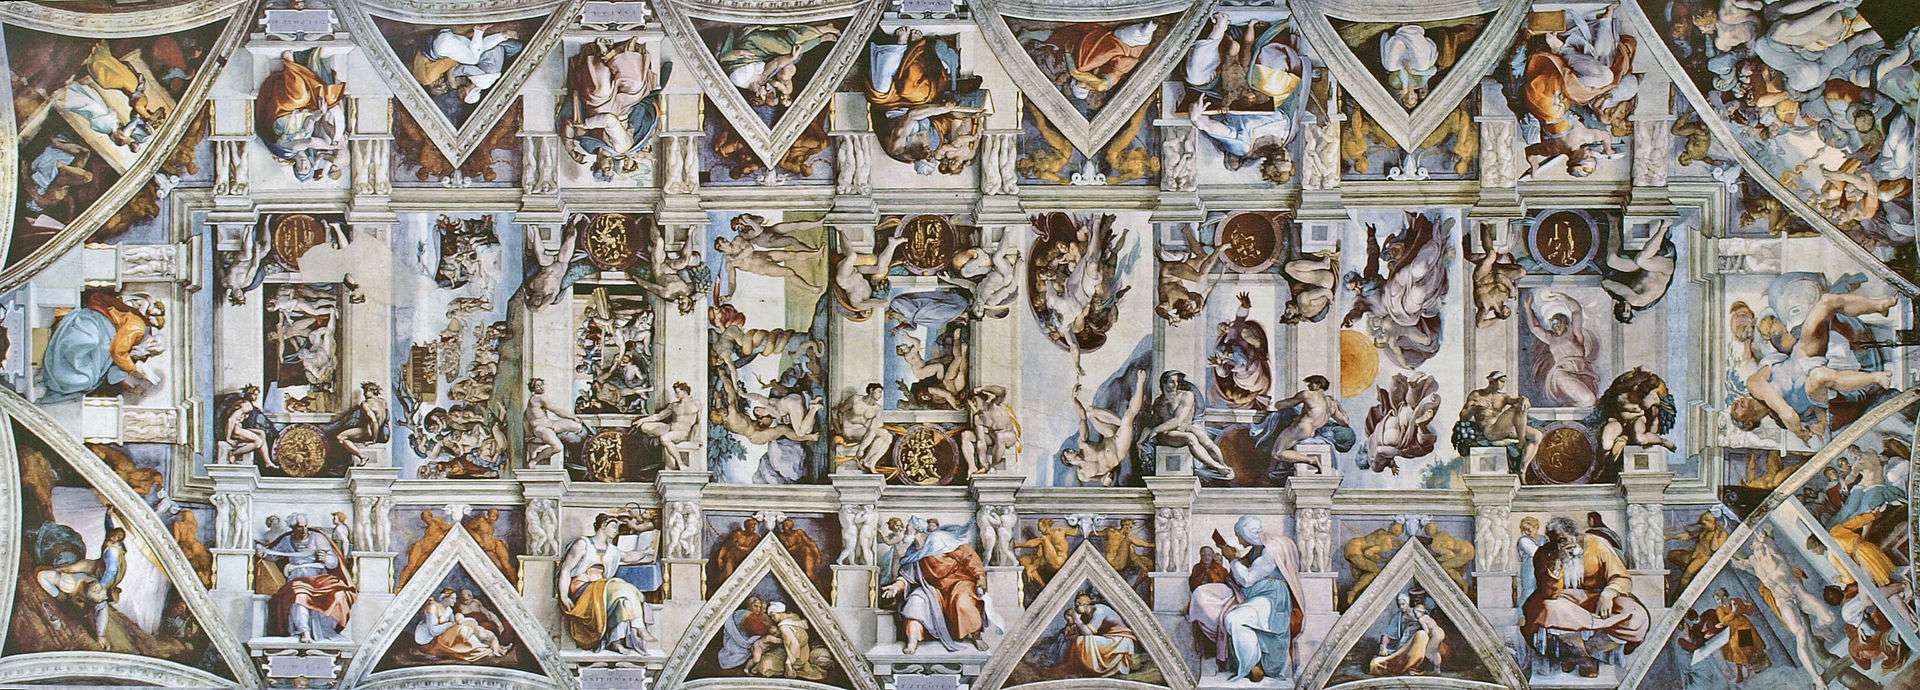 The Sistine Chapel Ceiling (1508–1512)